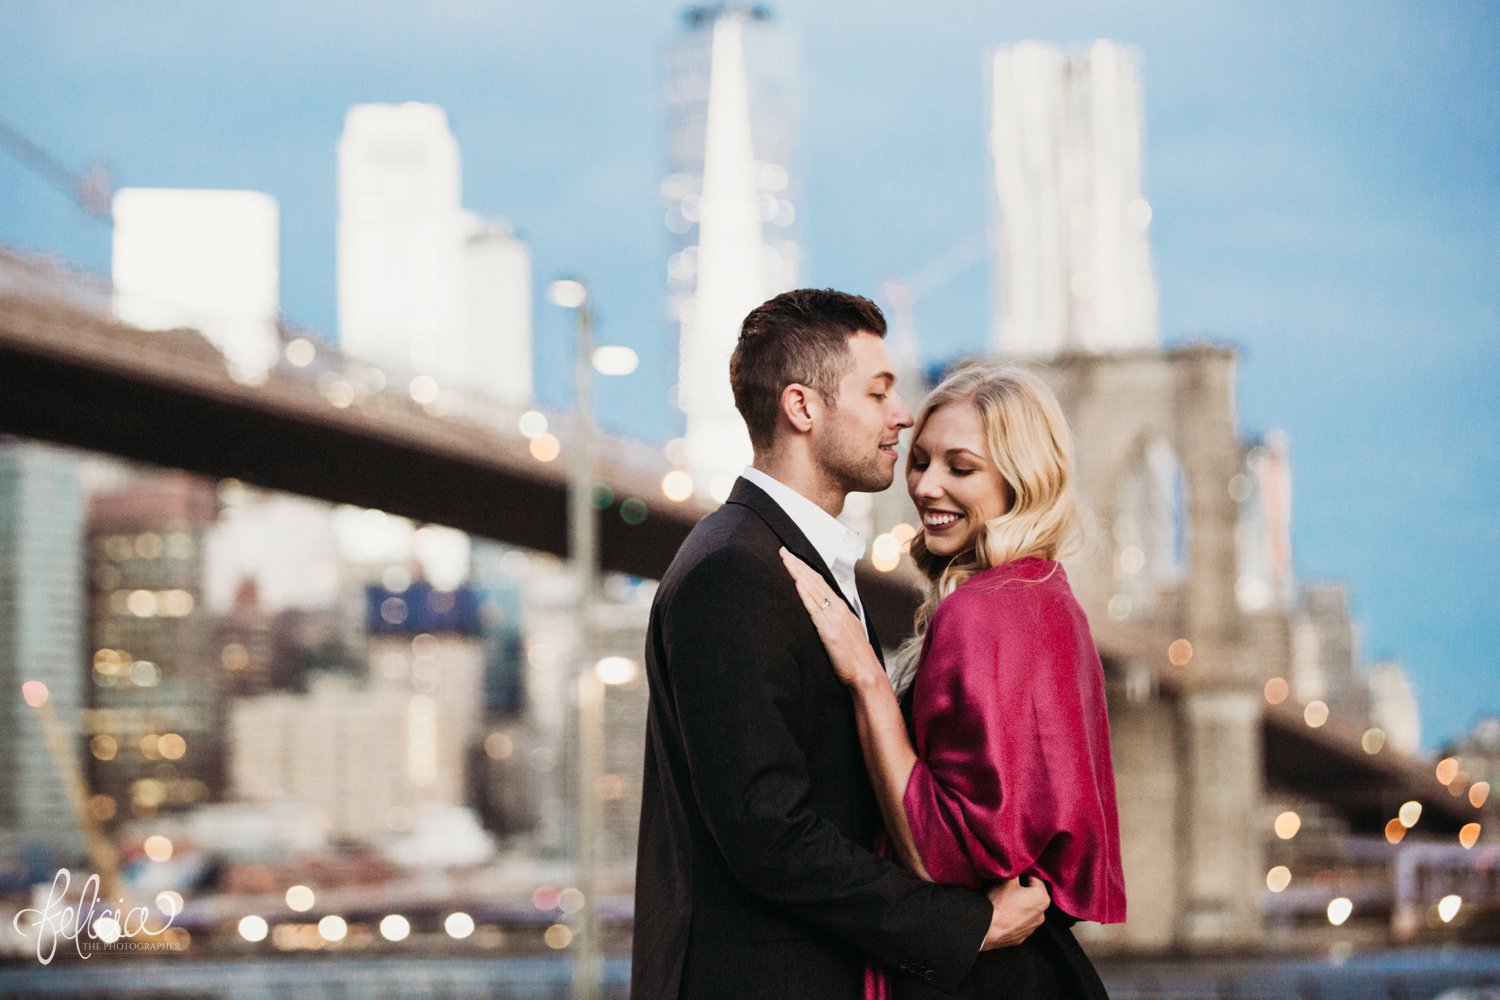 images by feliciathephotographer.com | destination wedding photographer | engagement | new york city | brooklyn bridge | skyline | formal | classic | true love | romantic | cuddles | pearls | diamond ring | urban | 